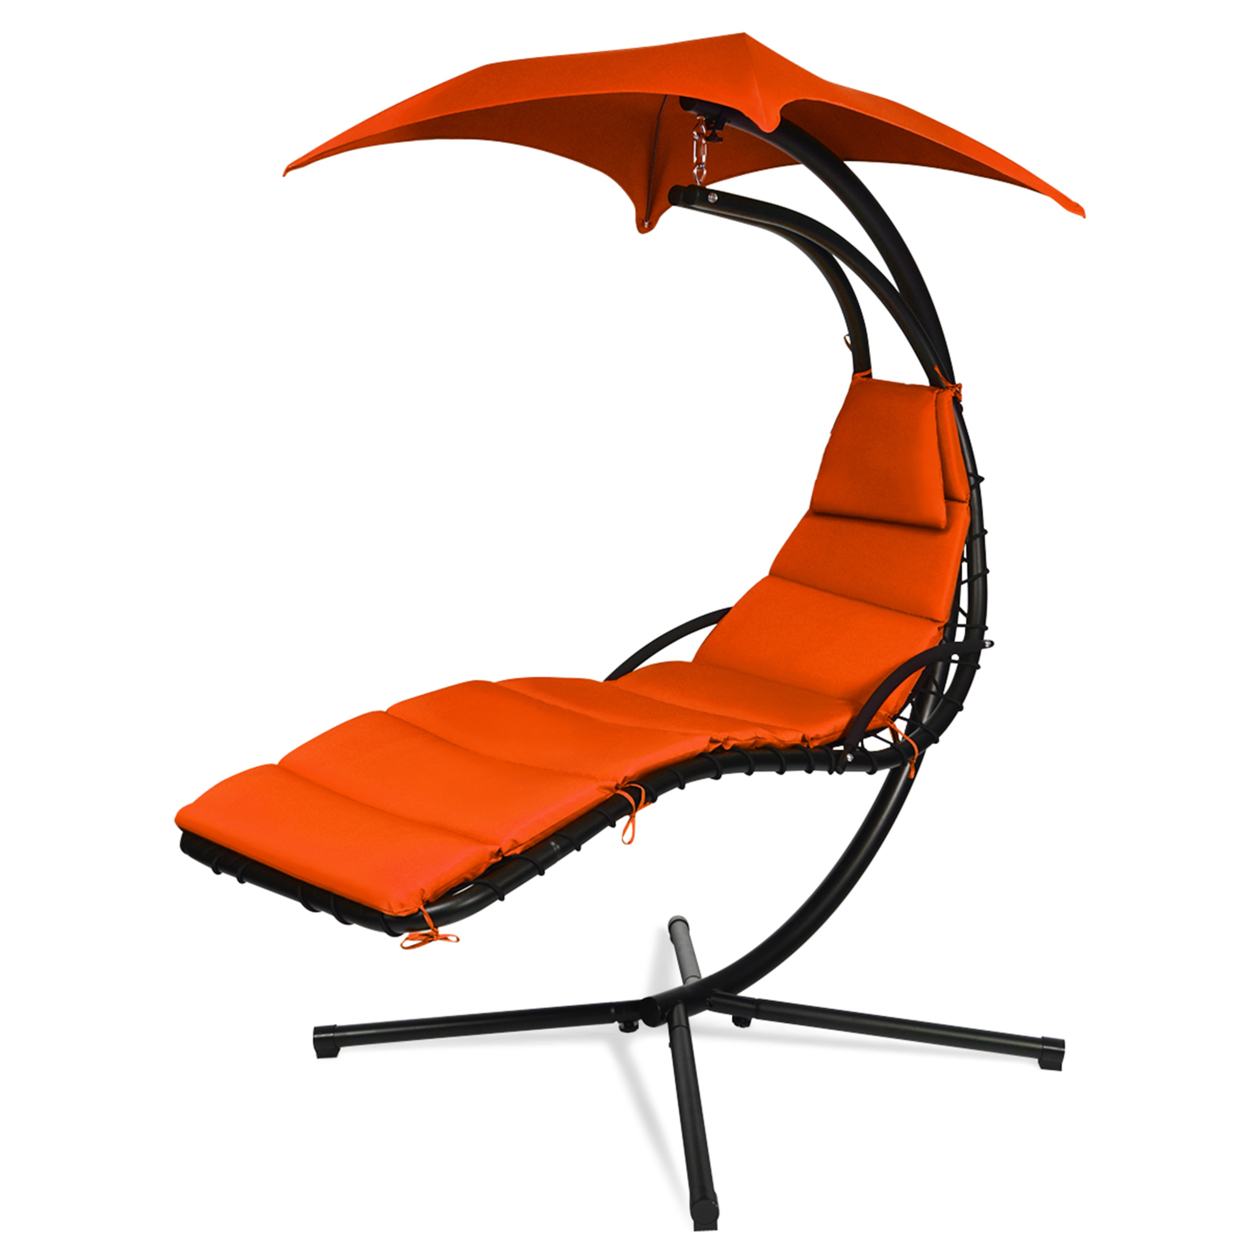 Patio Hammock Swing Chair Hanging Chaise W/ Cushion Pillow Canopy Orange